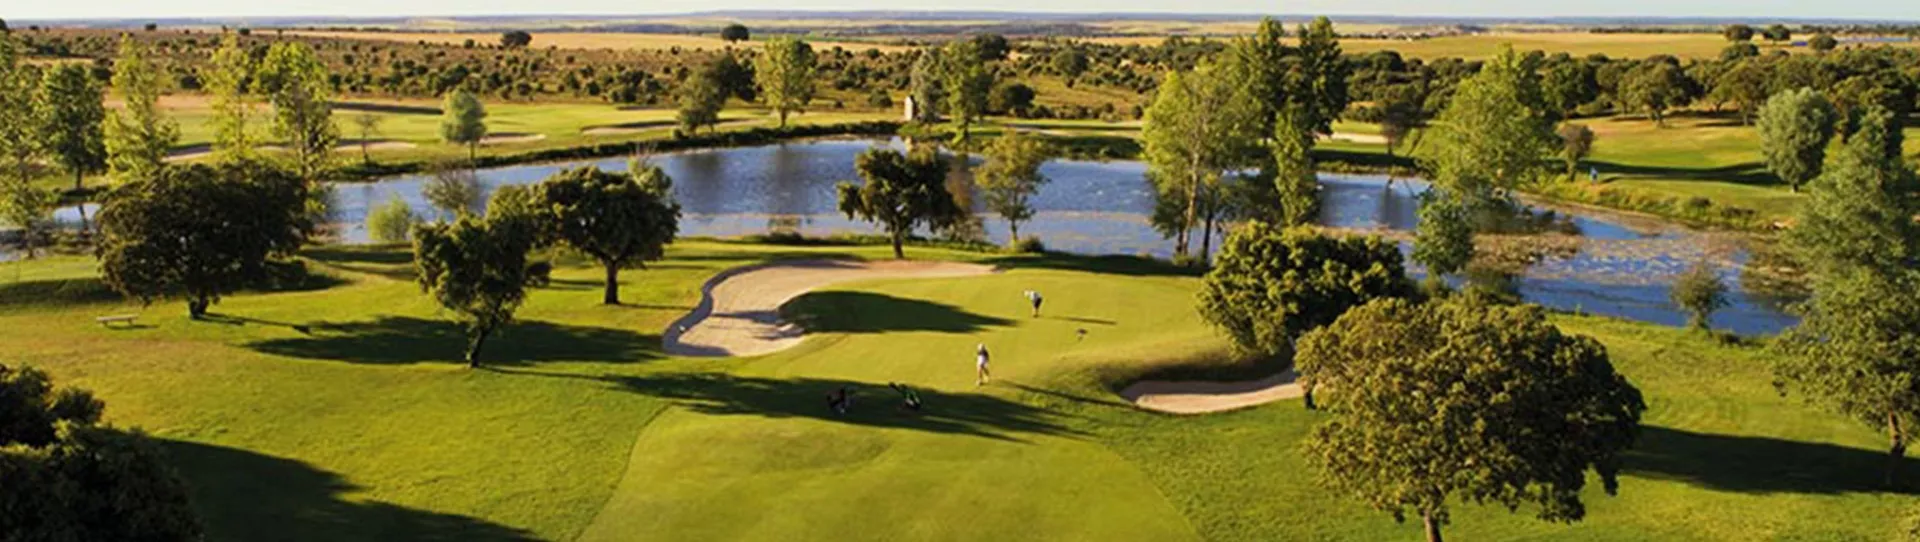 Spain golf courses - Salamanca Golf Course - Photo 1